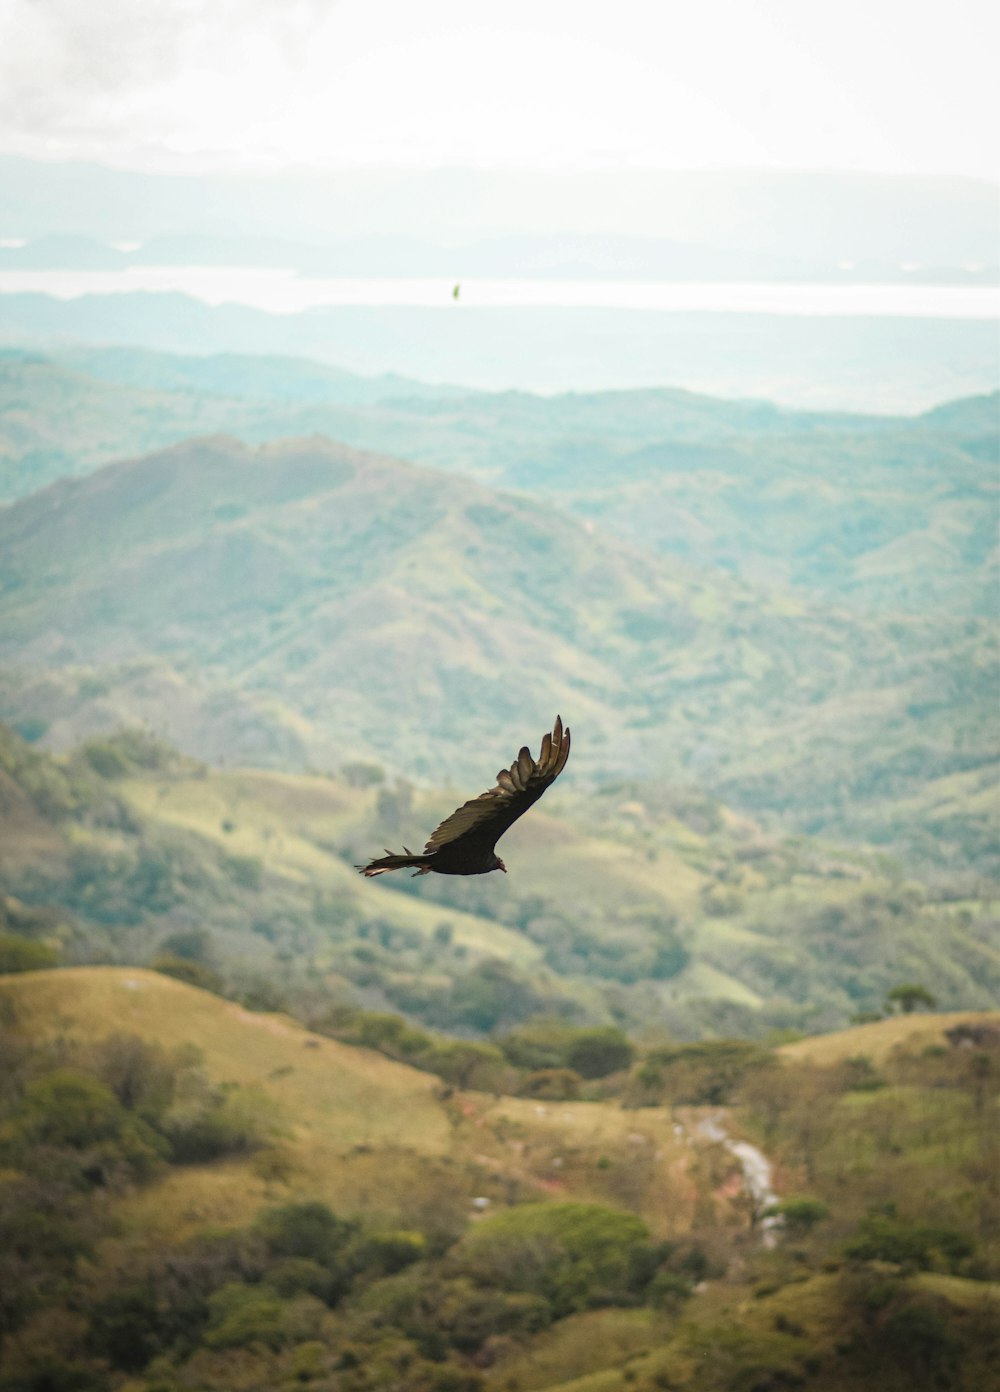 a large bird flying over a lush green hillside